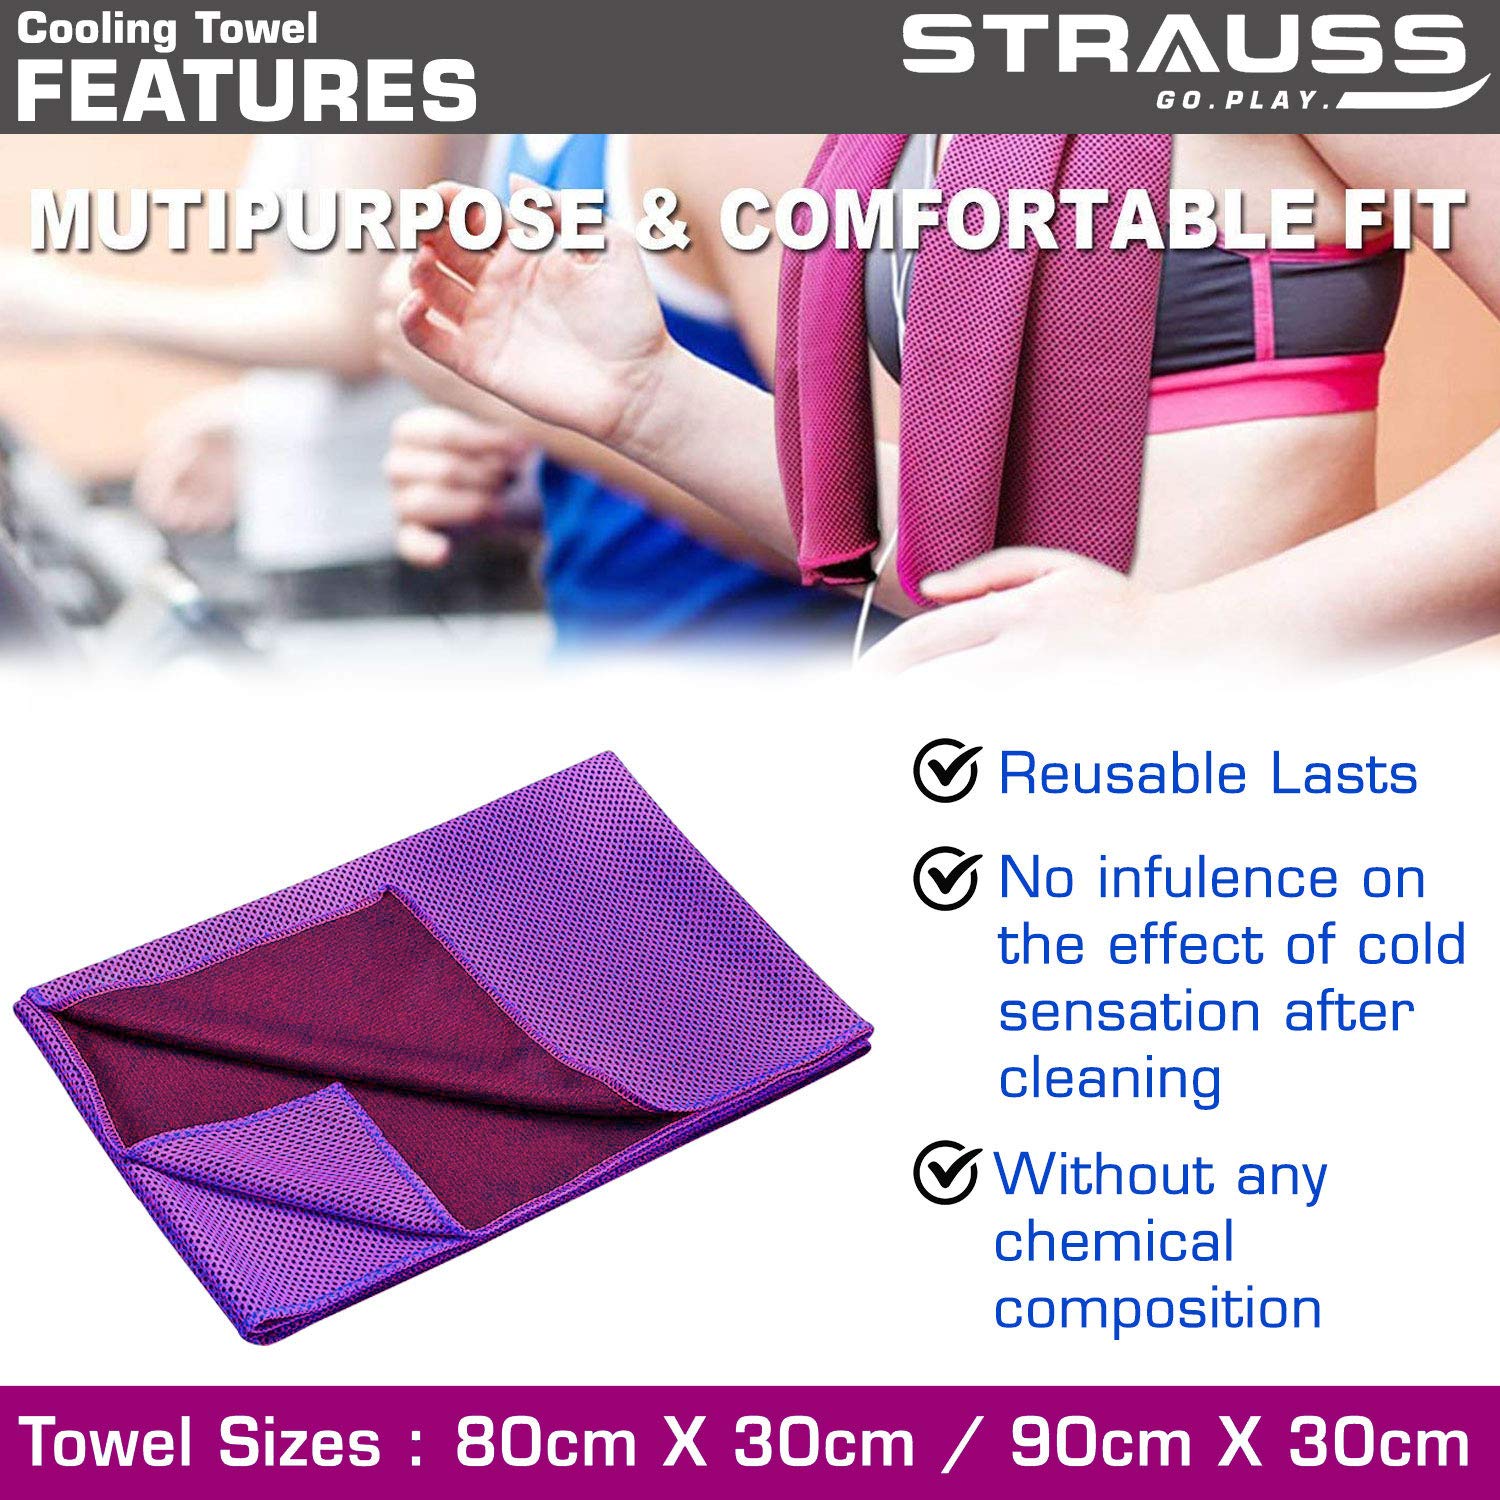 STRAUSS Cooling Towel, 80 cm, (Purple)